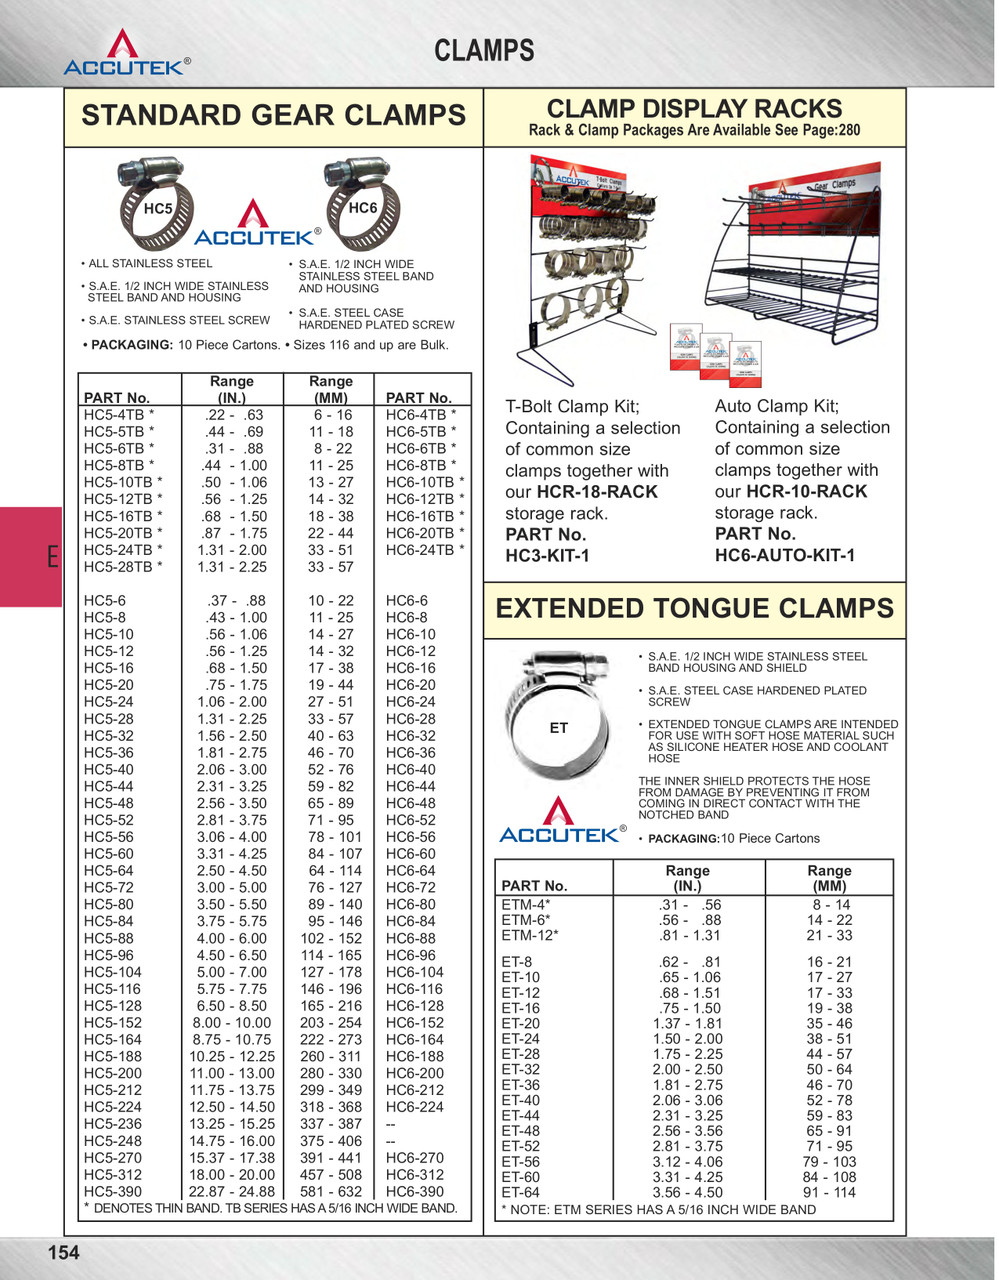 3-3/4" Standard Gear Clamp - S/S Band - Ferrous Screw  HC6-60